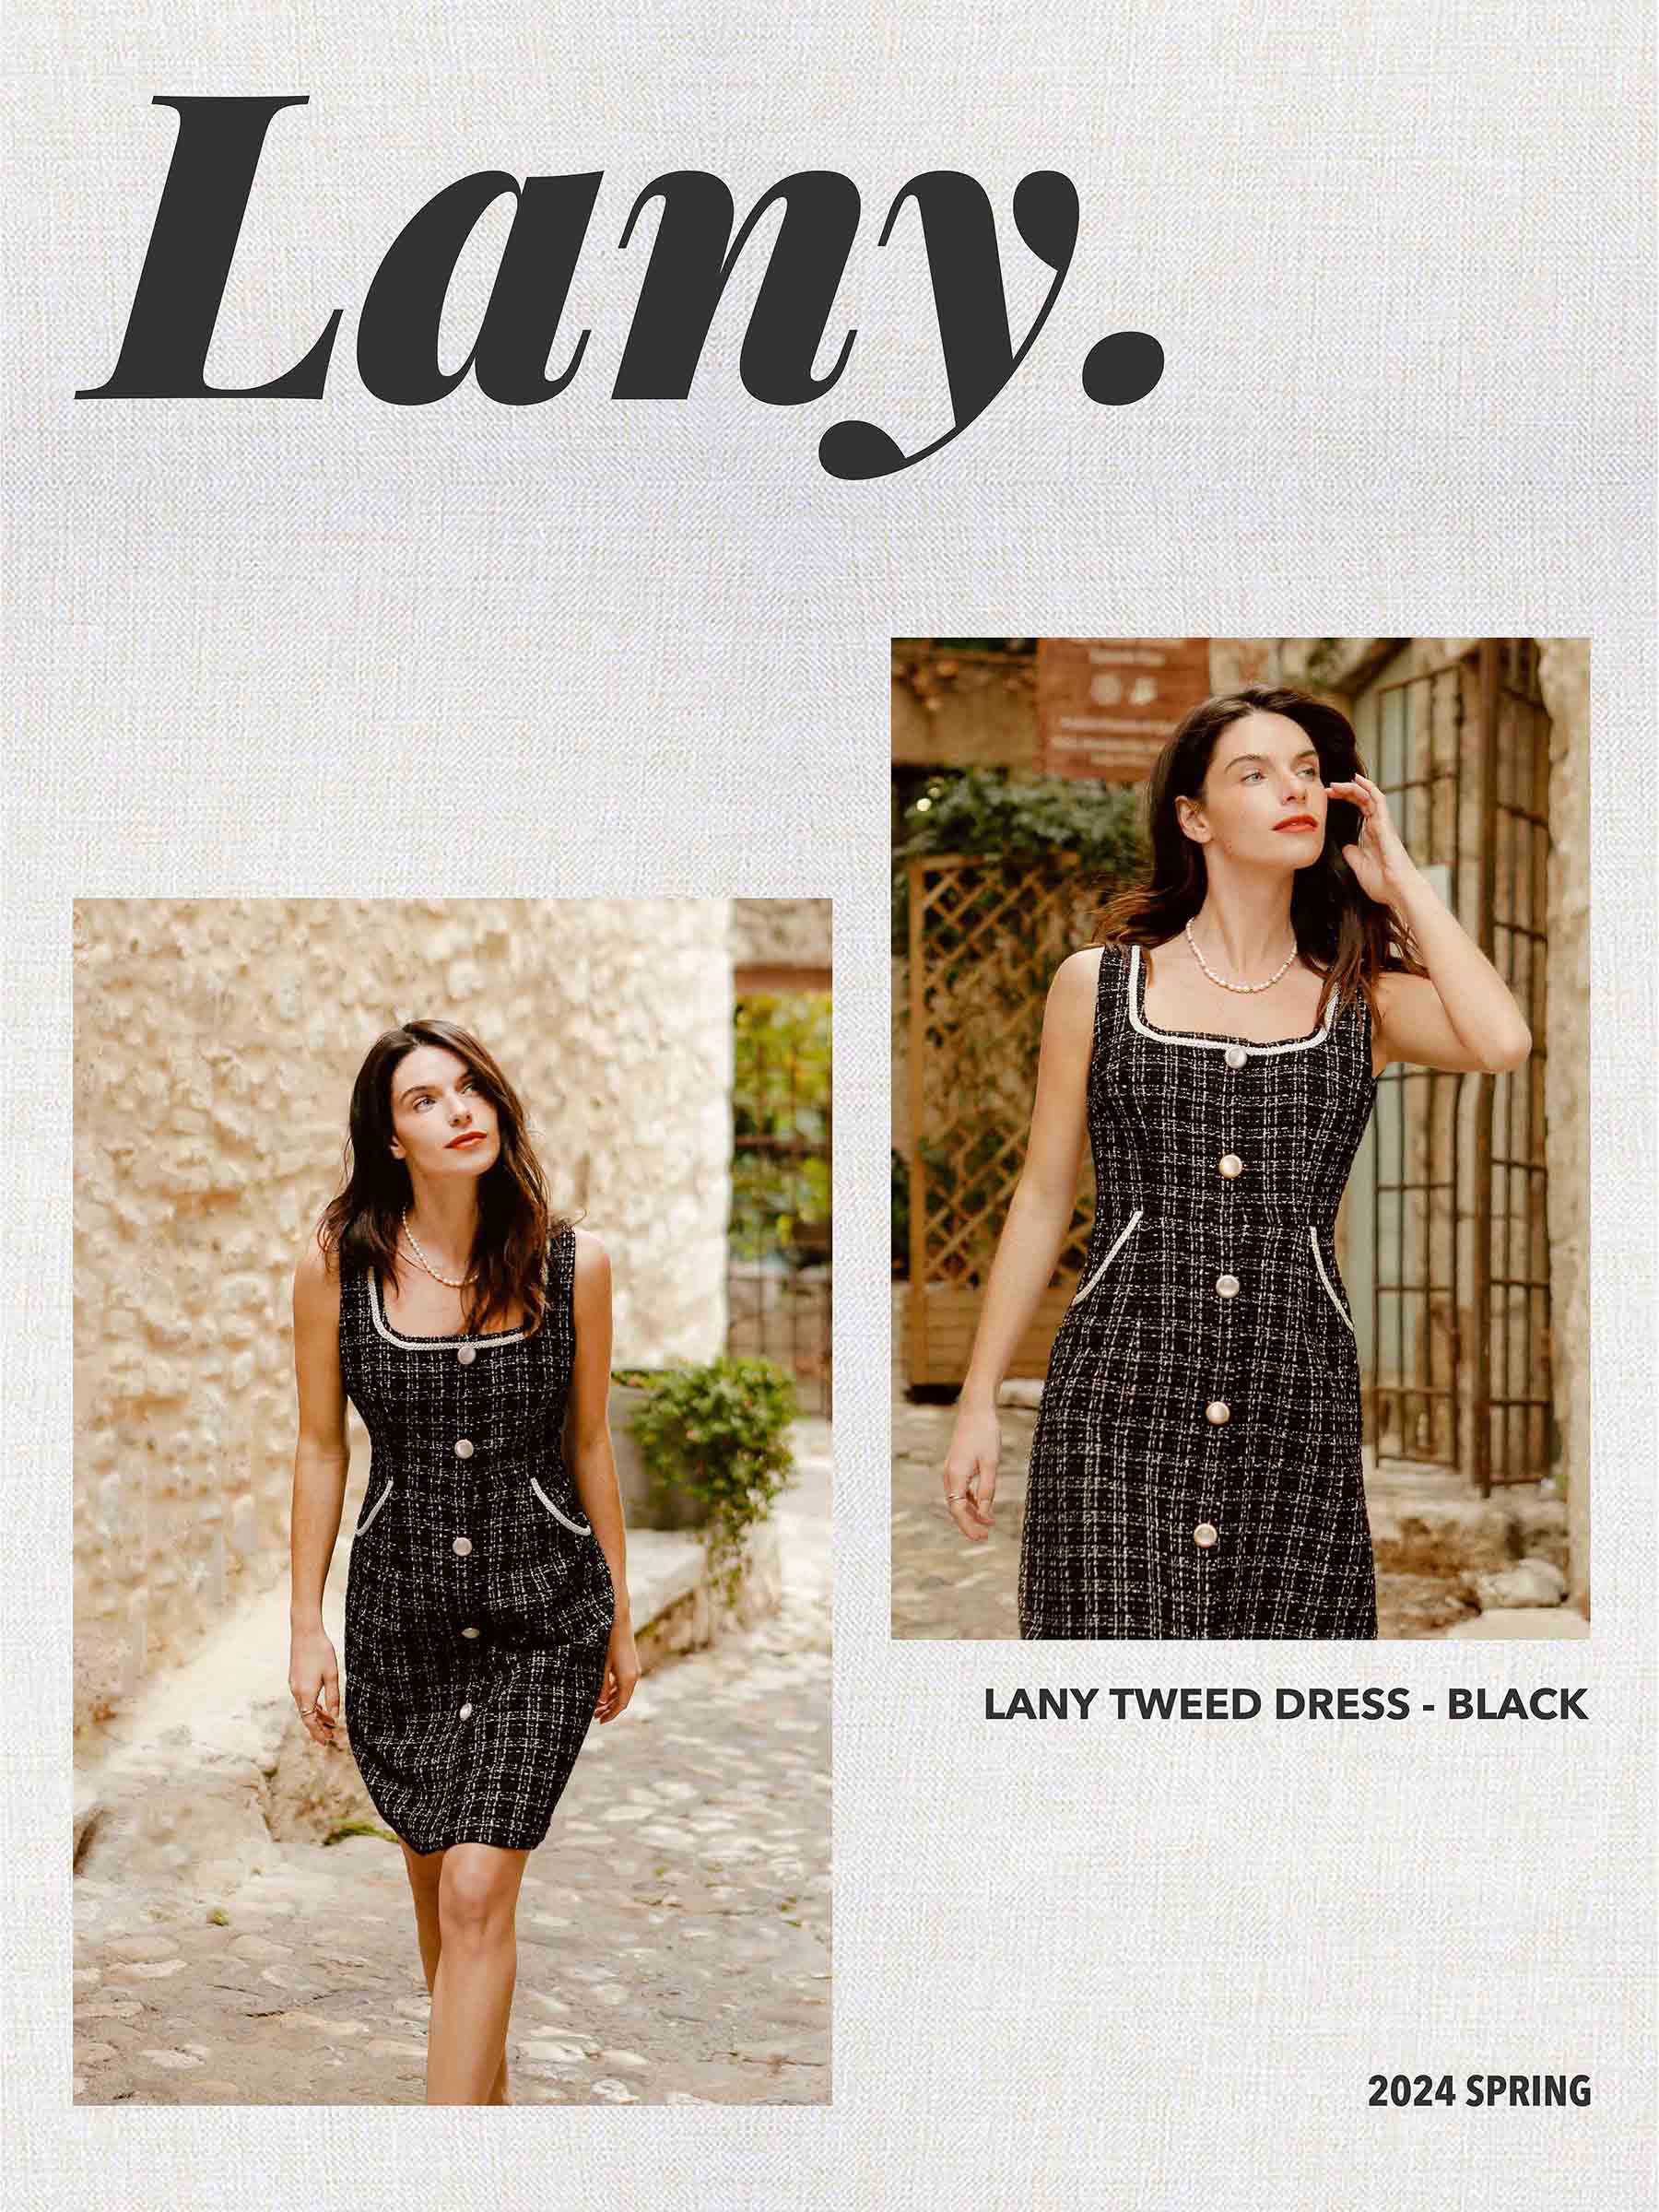 Petite Studio's Lany Tweed Dress - Black Spring '24